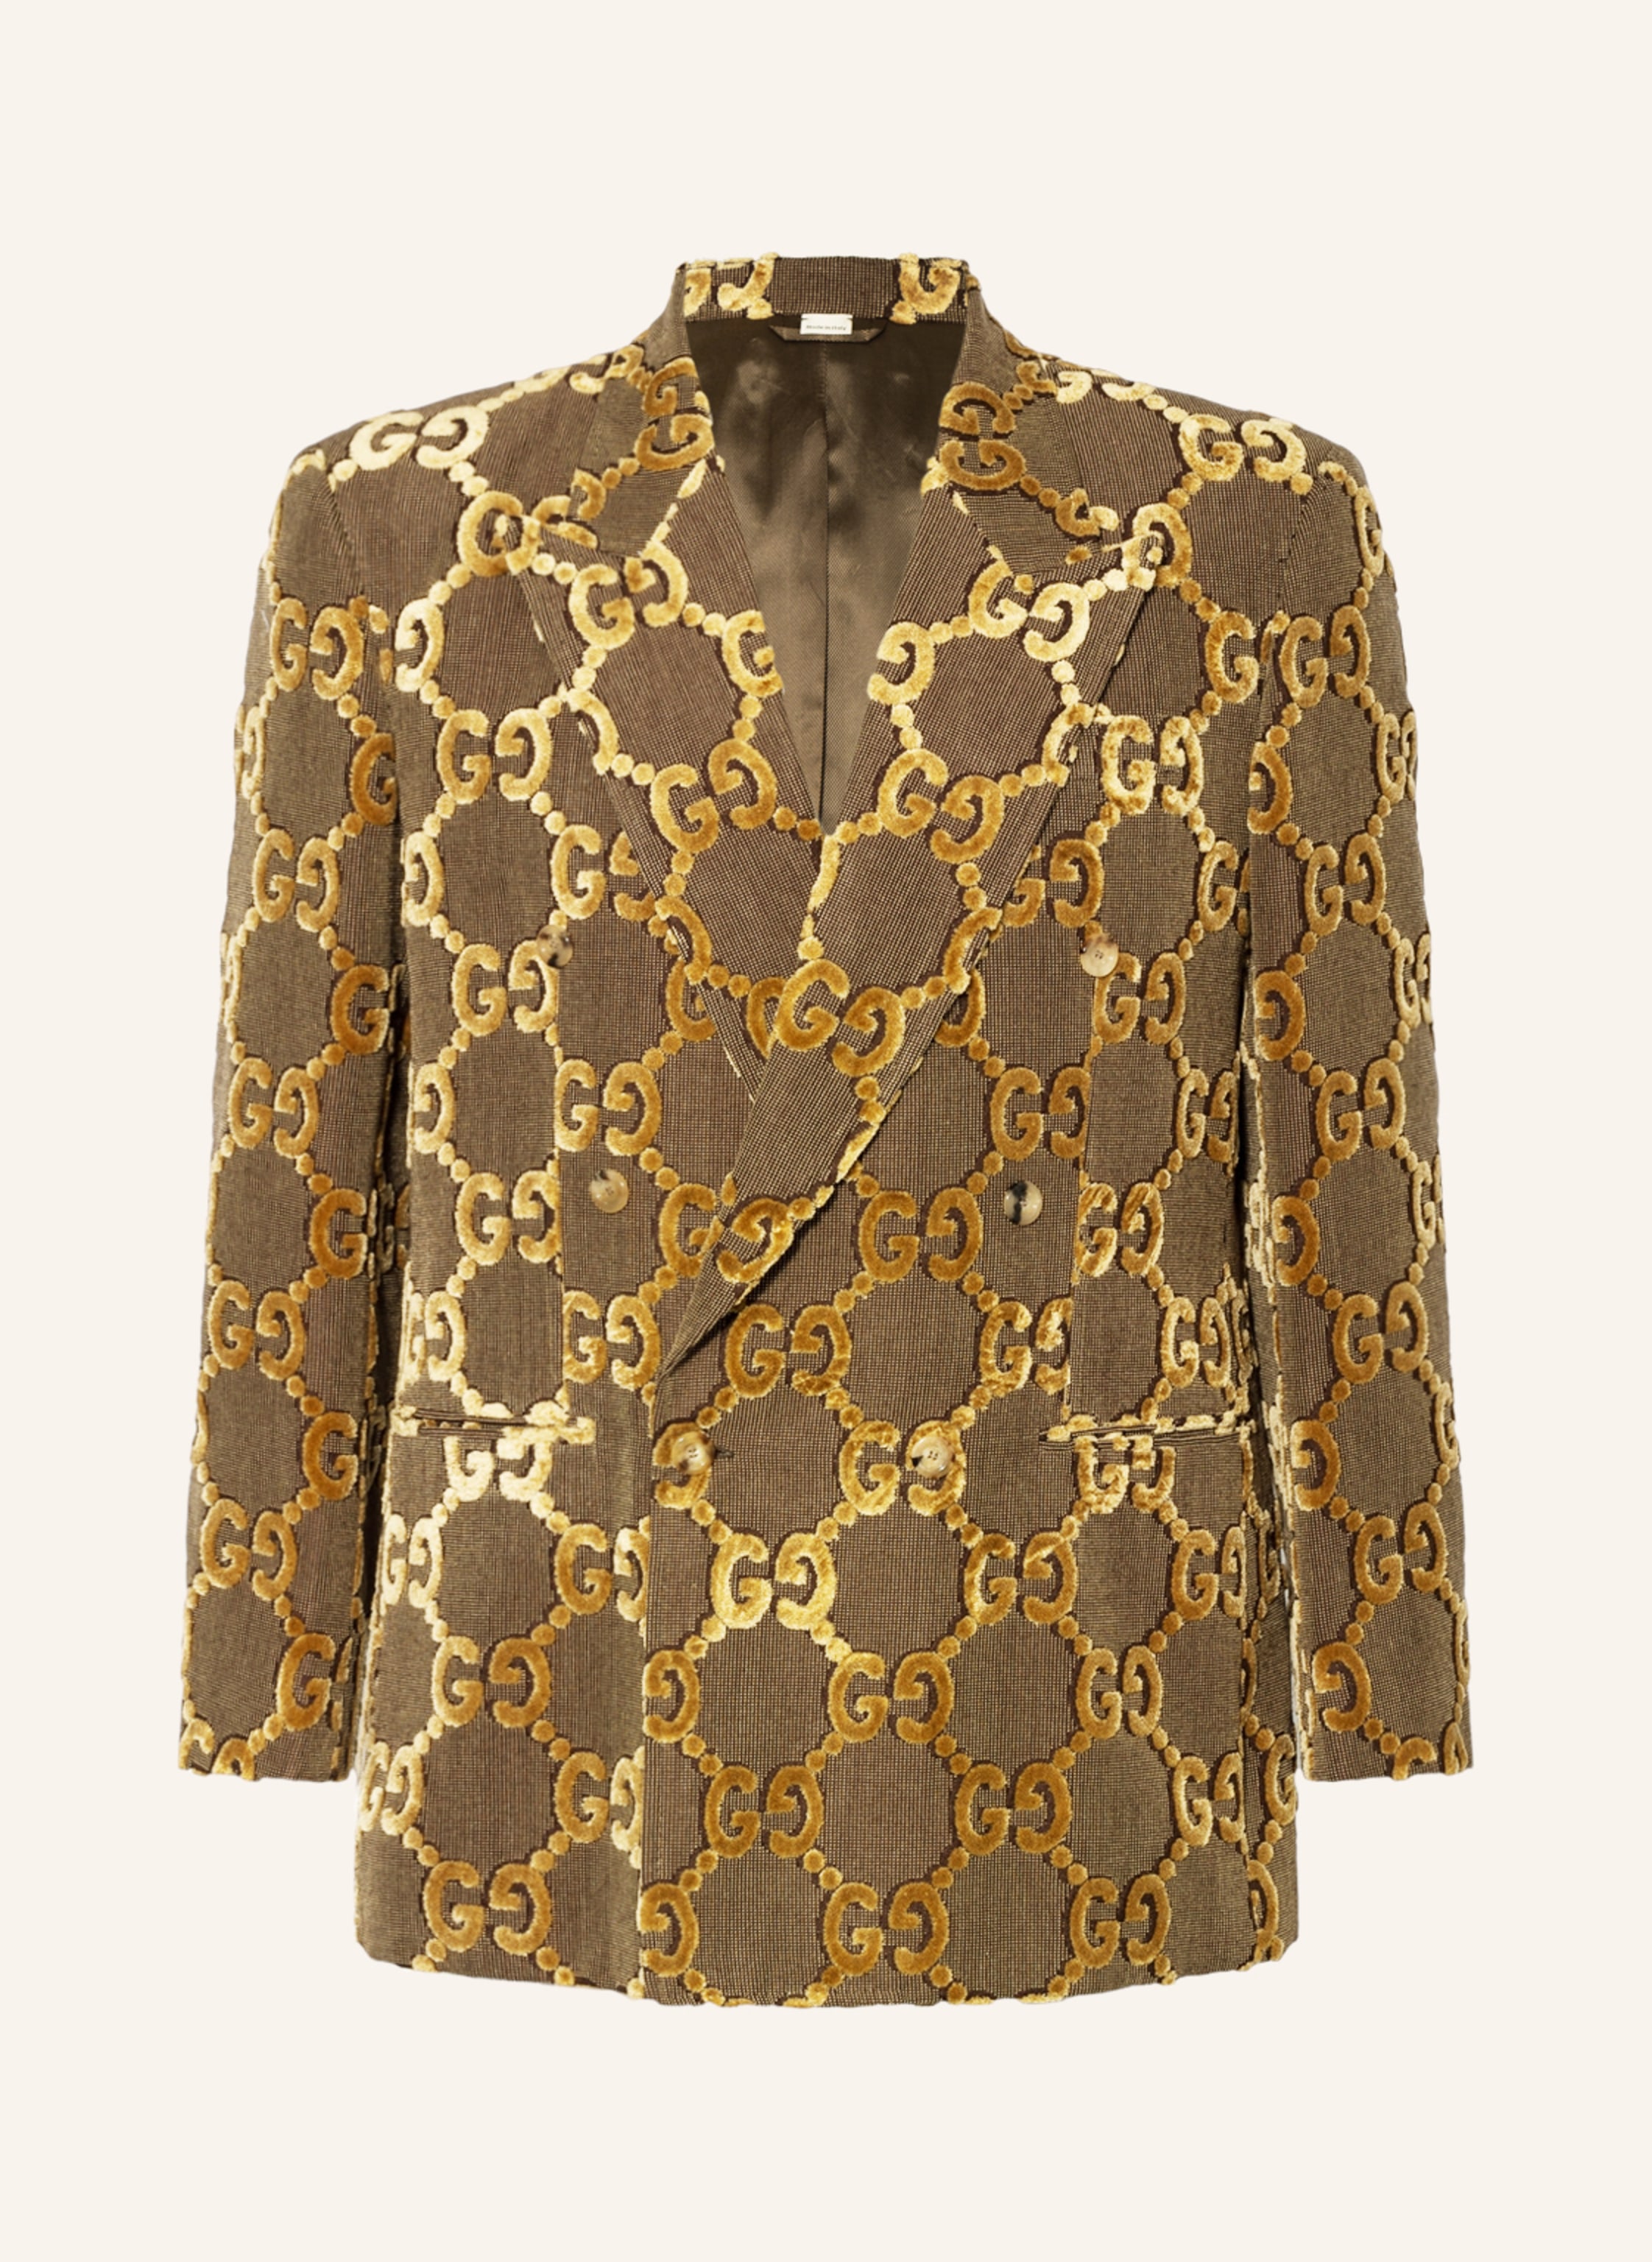 GUCCI Suit jacket regular fit in 9742 beige/ebony | Breuninger